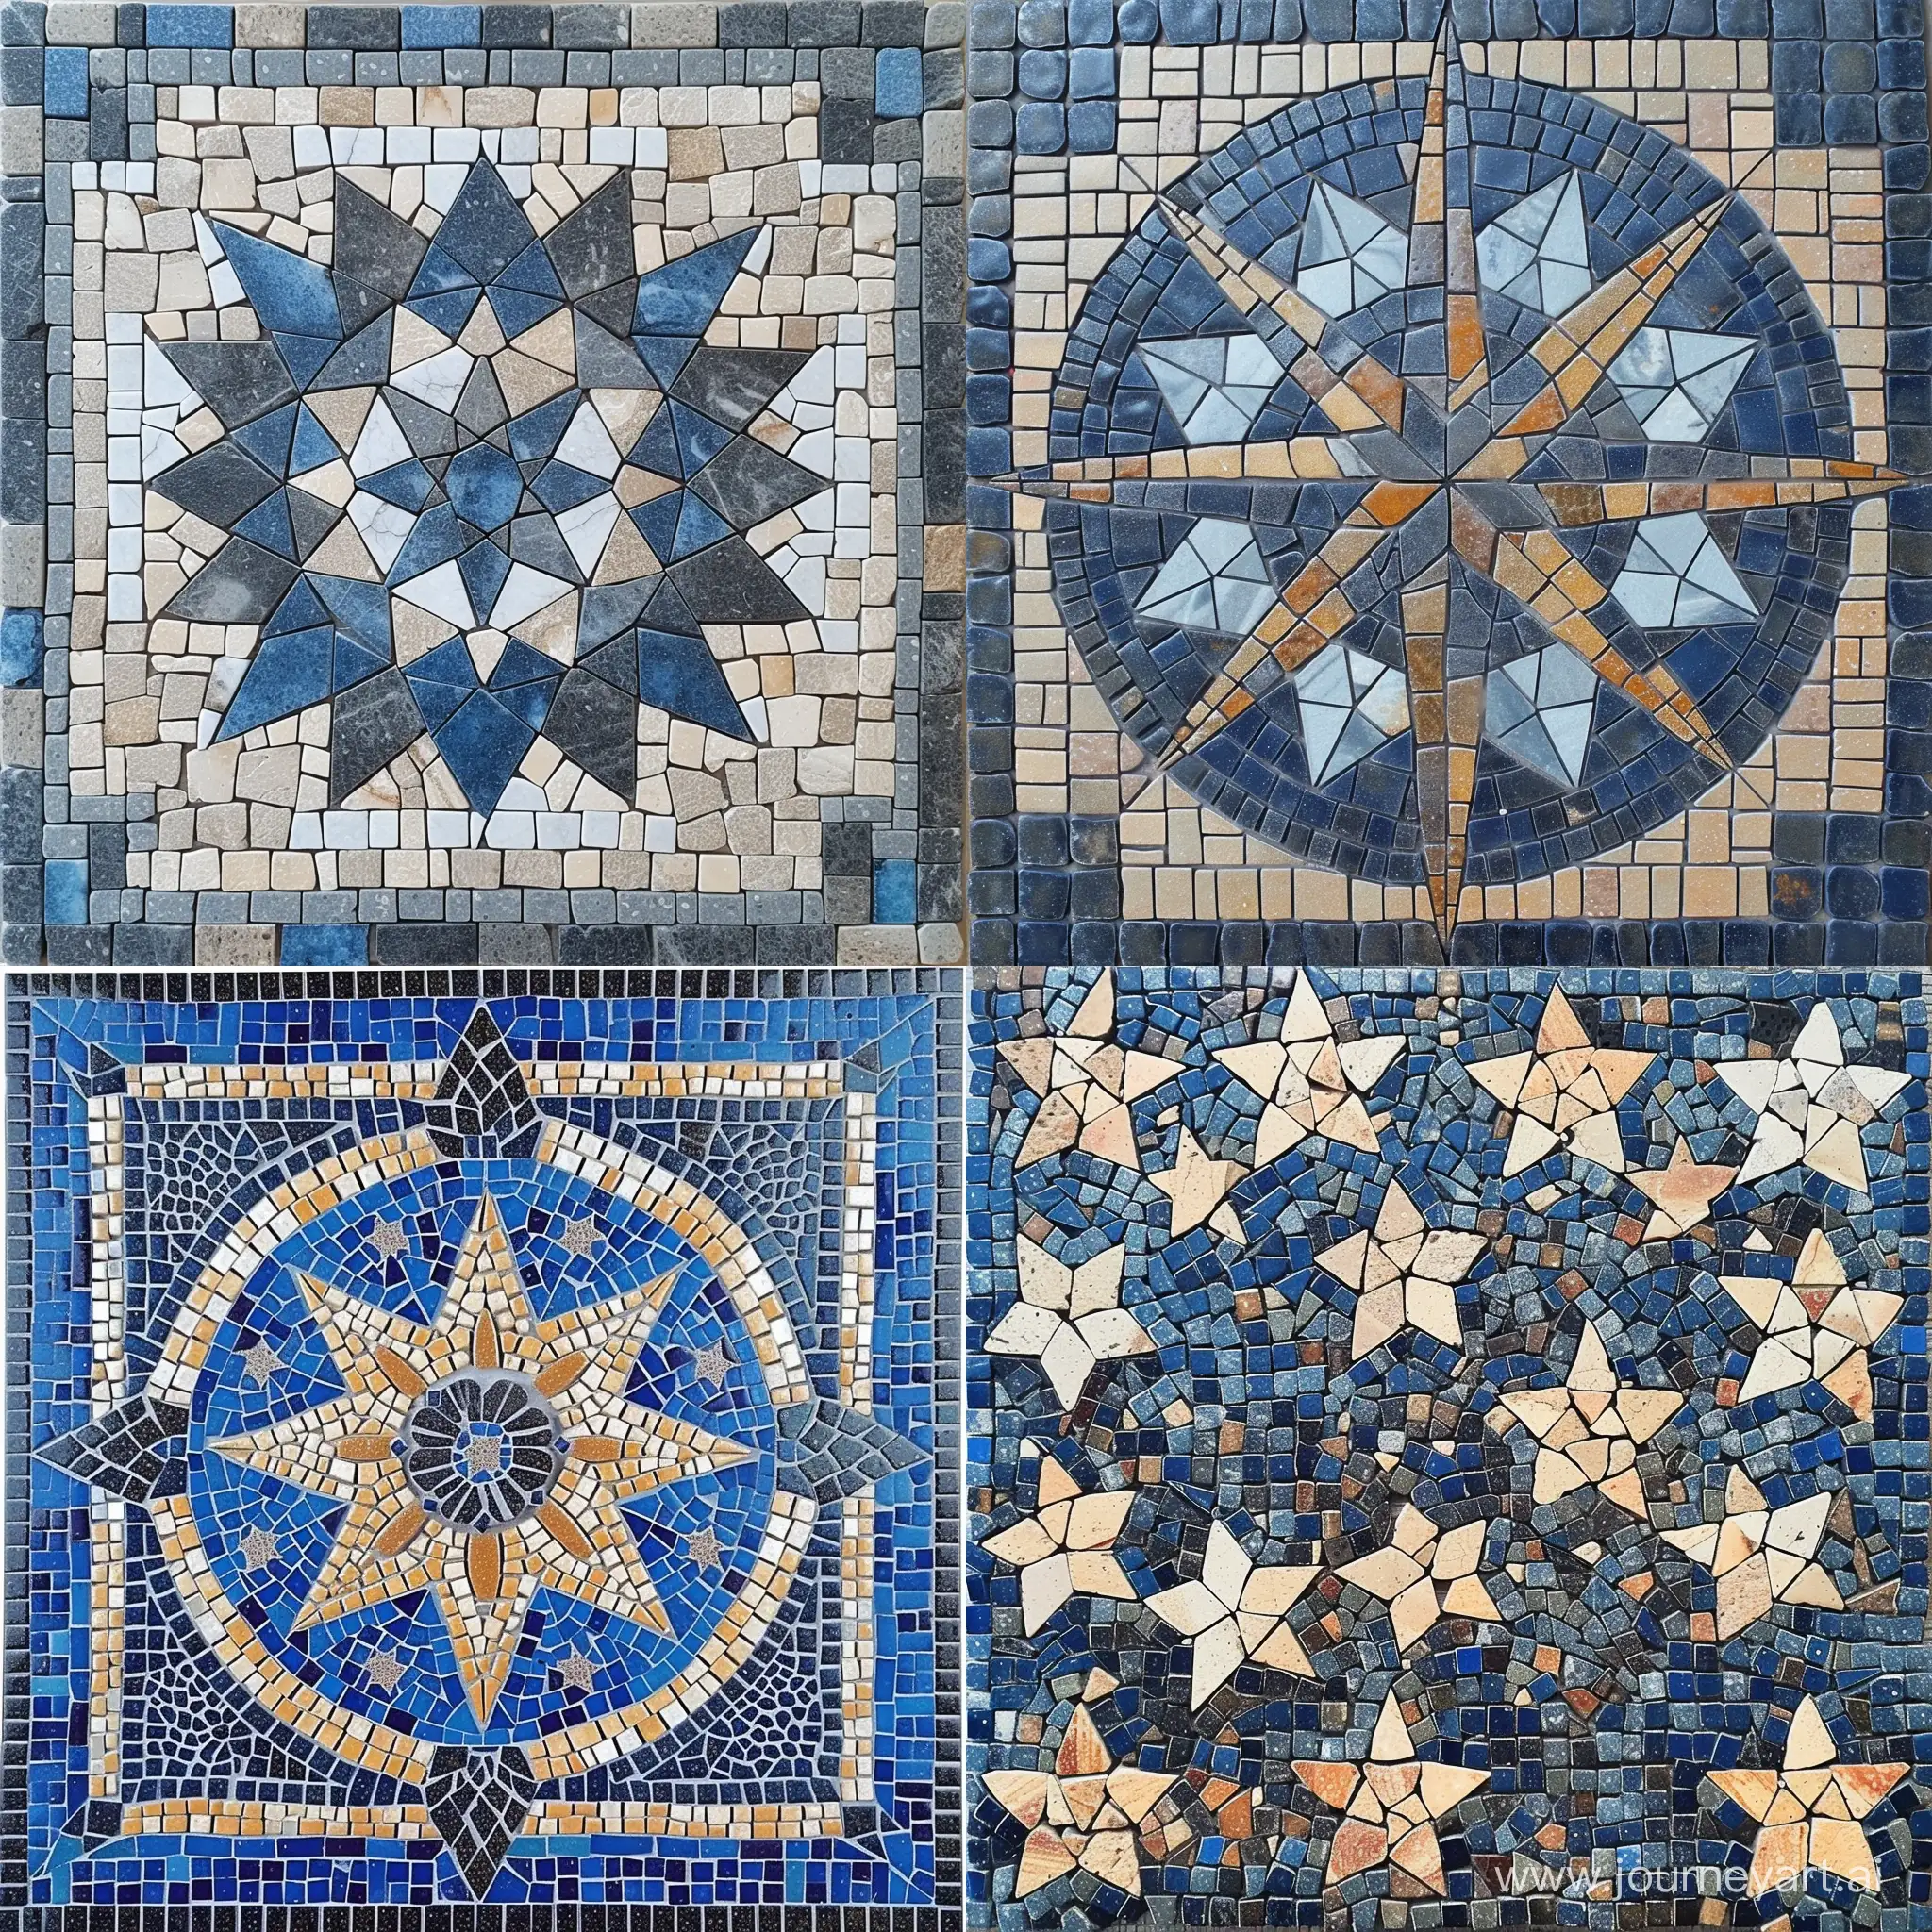 mosaic floor tile, star themed, blueish colors, zenithal view, big picture, complex design, cartoon style, arabesque